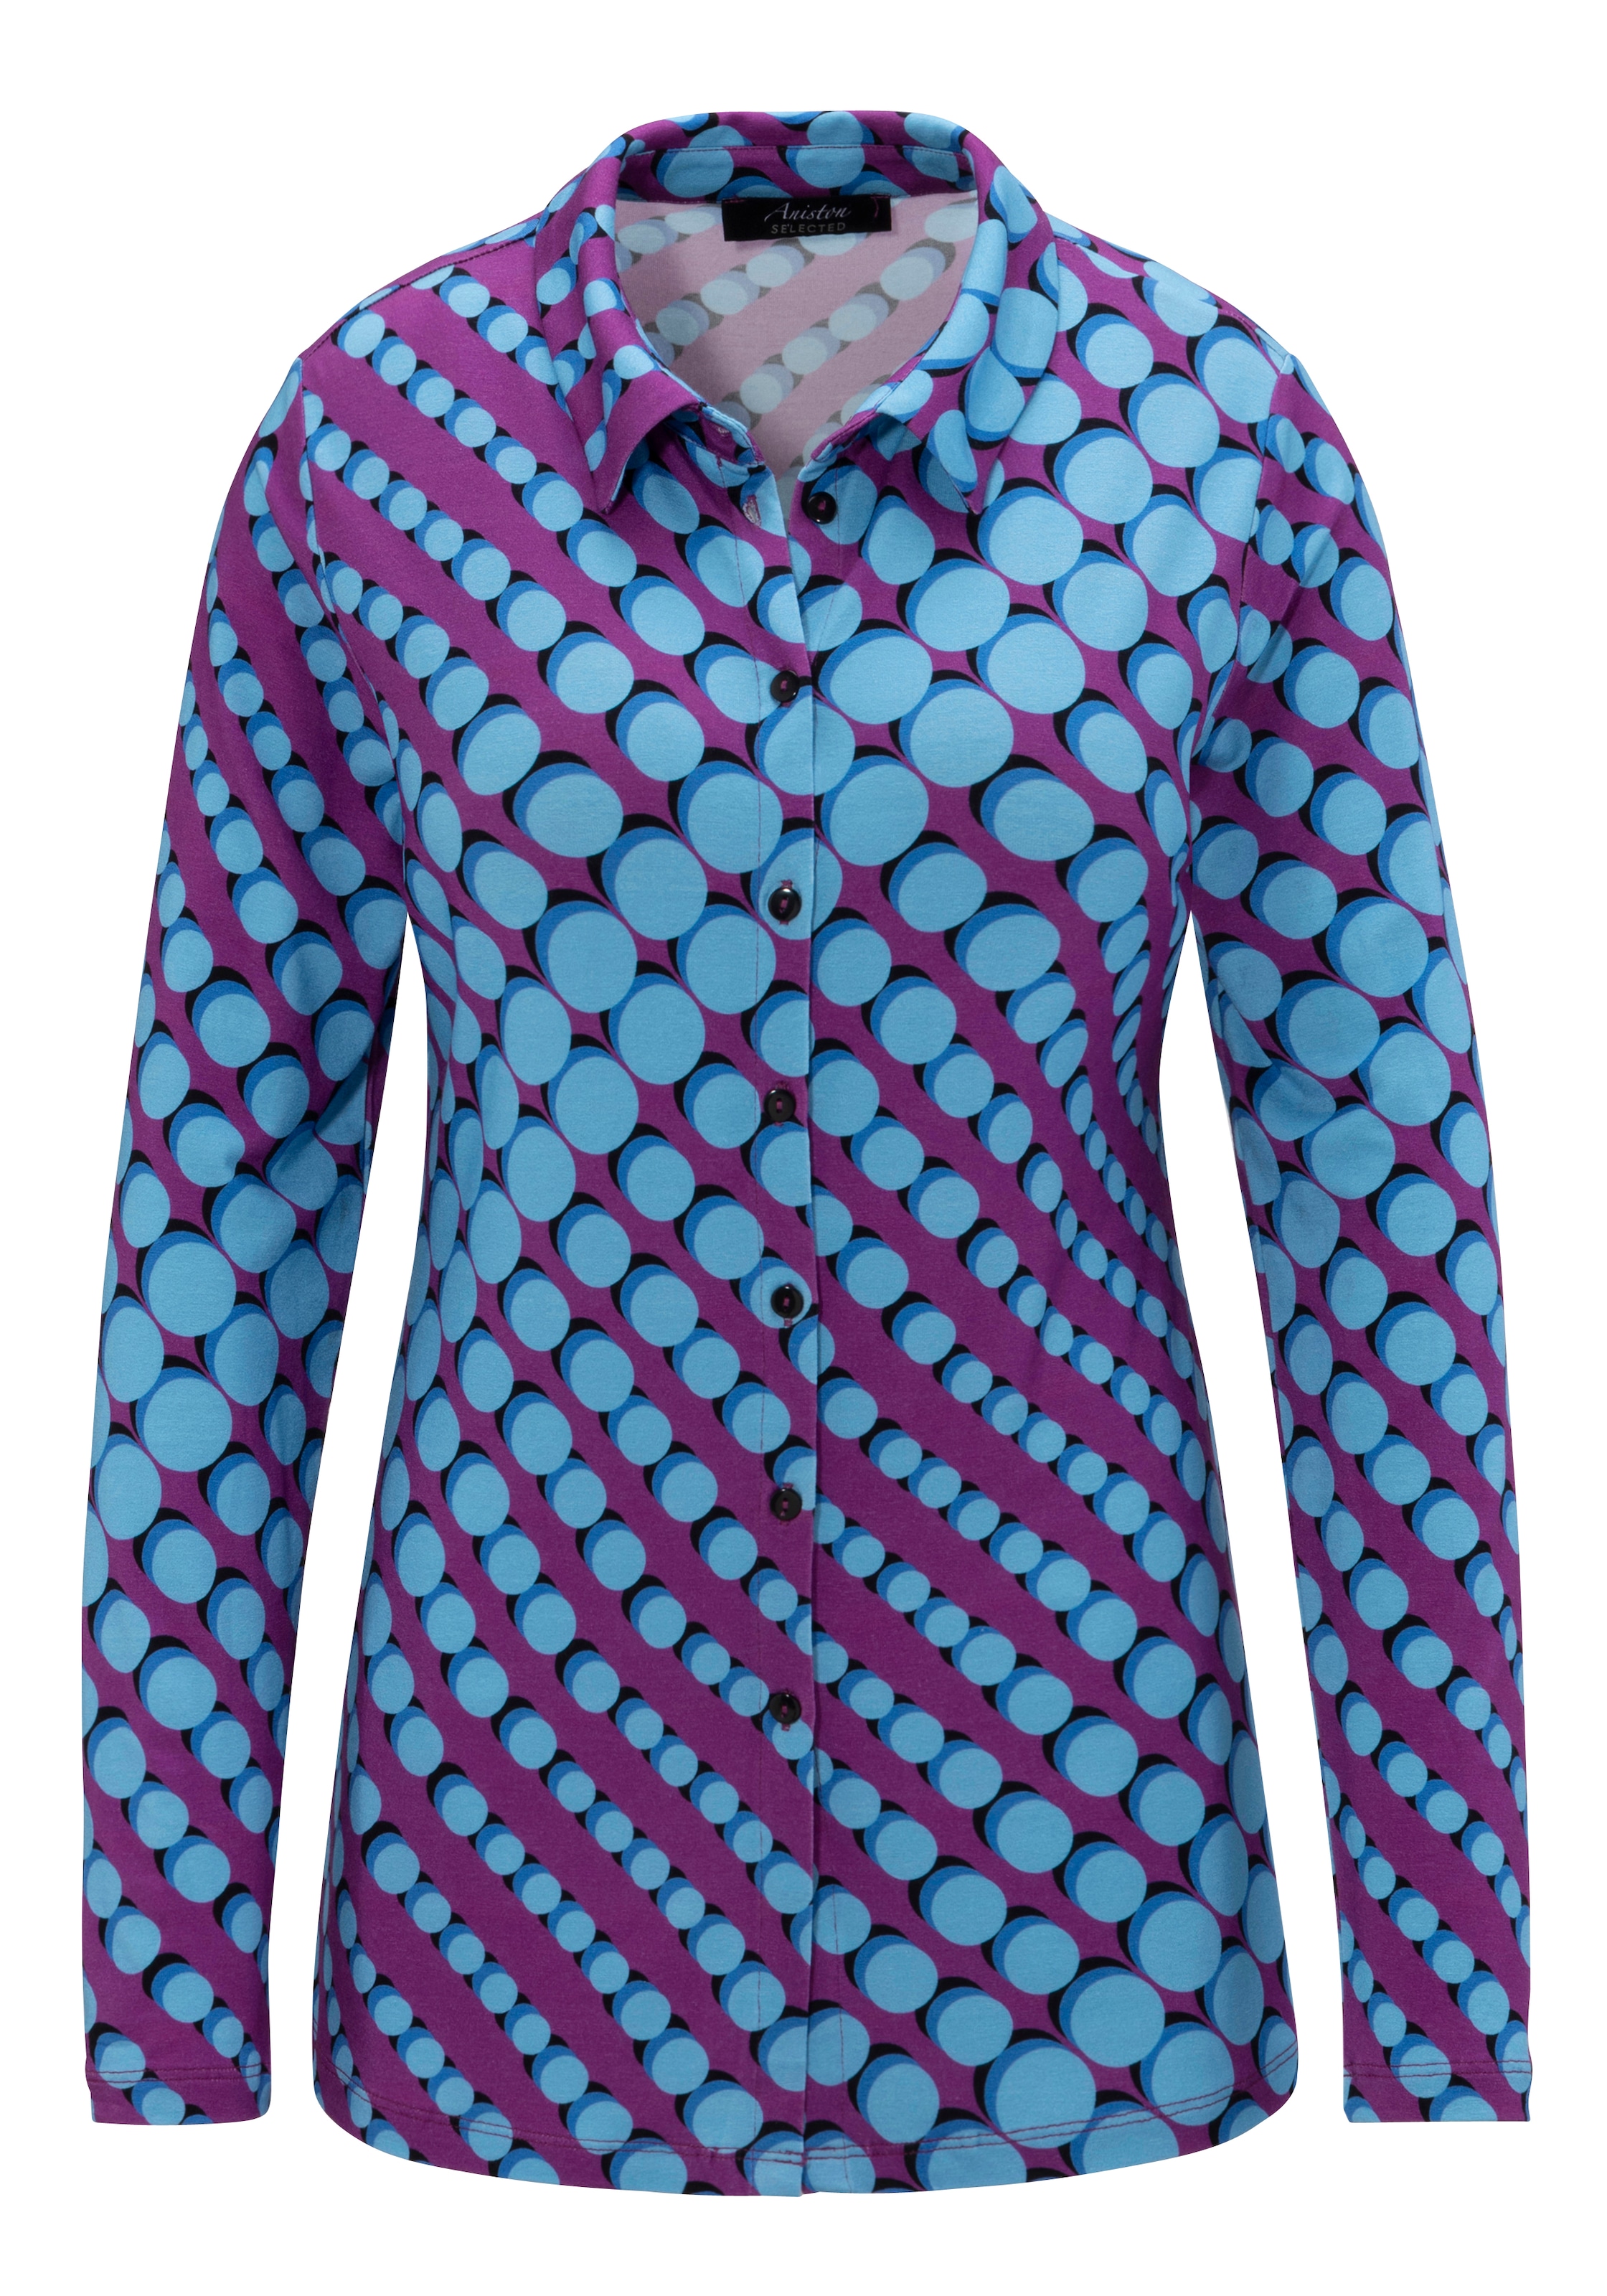 Aniston SELECTED Hemdbluse, aus elastischem Jersey, mit retro Punktedruck -  NEUE KOLLEKION kaufen | BAUR | Hemdblusen